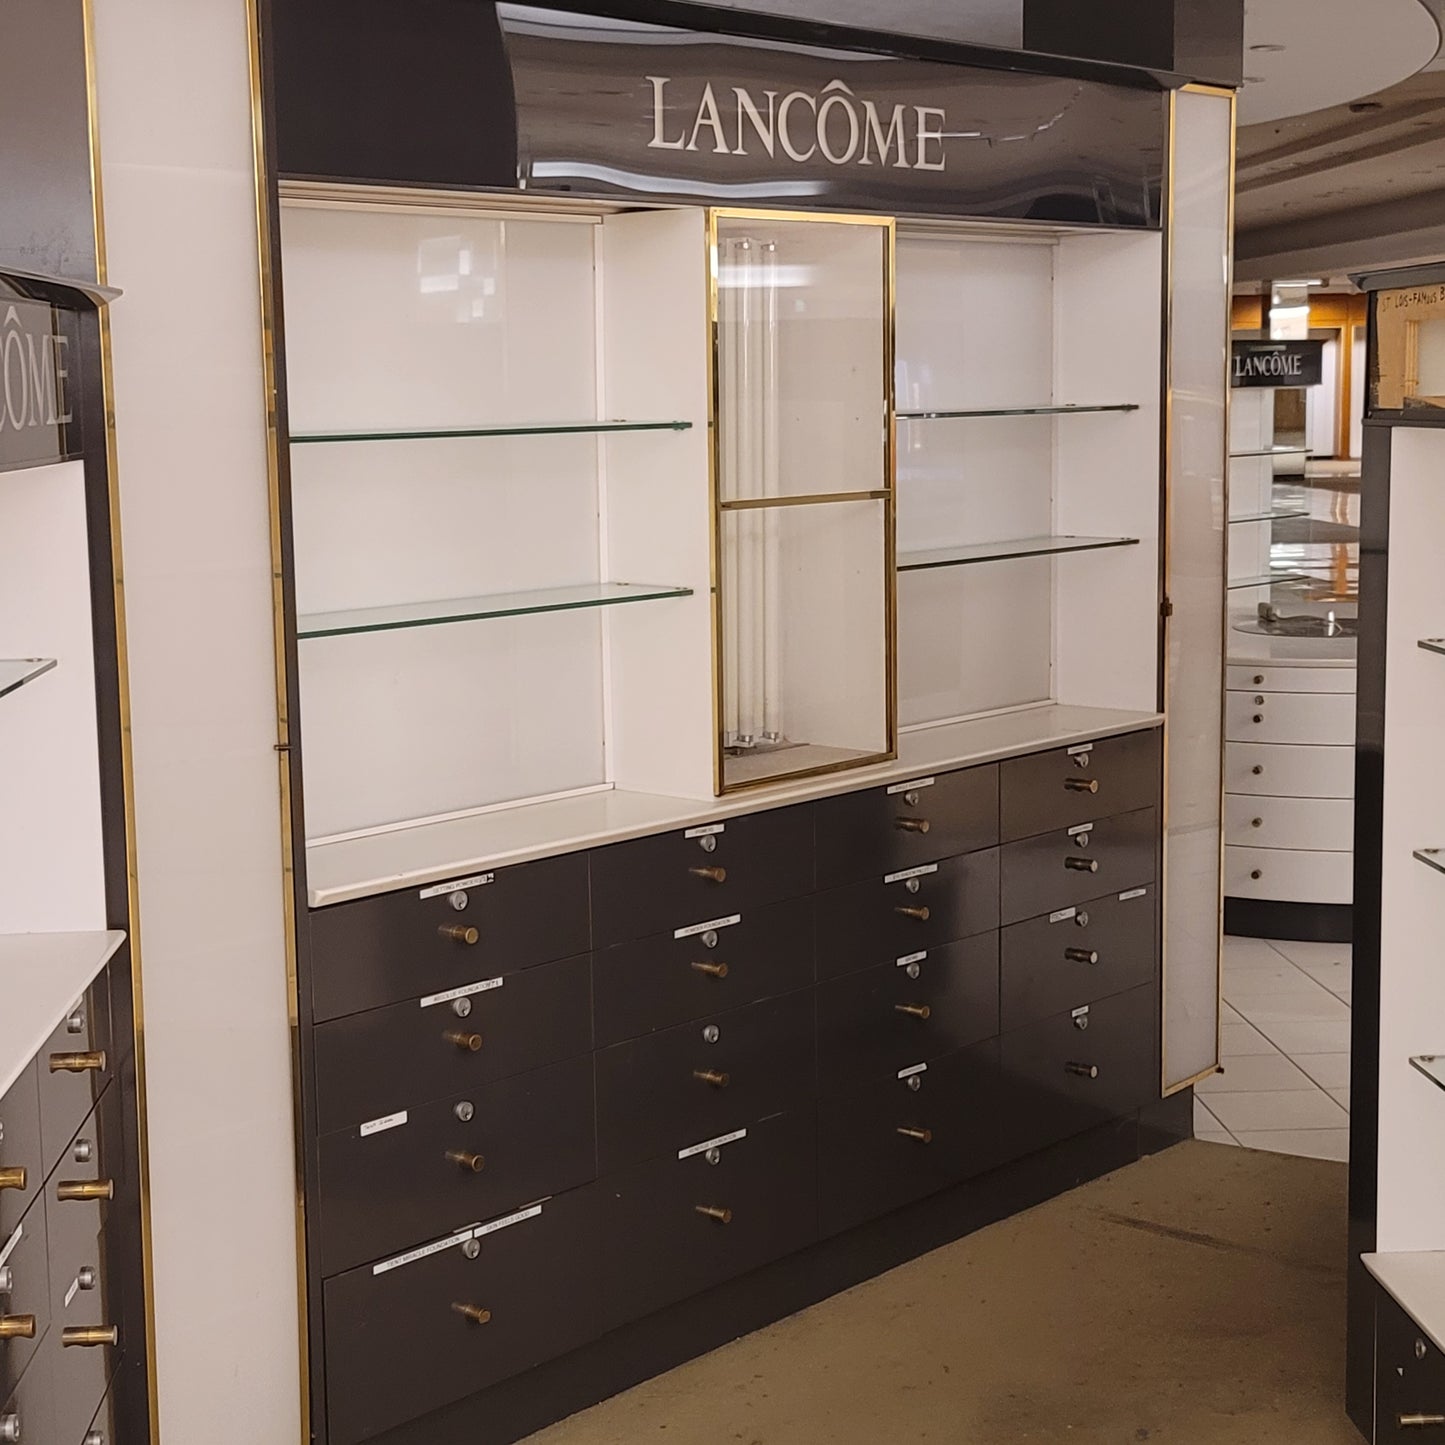 Large Lancome Display